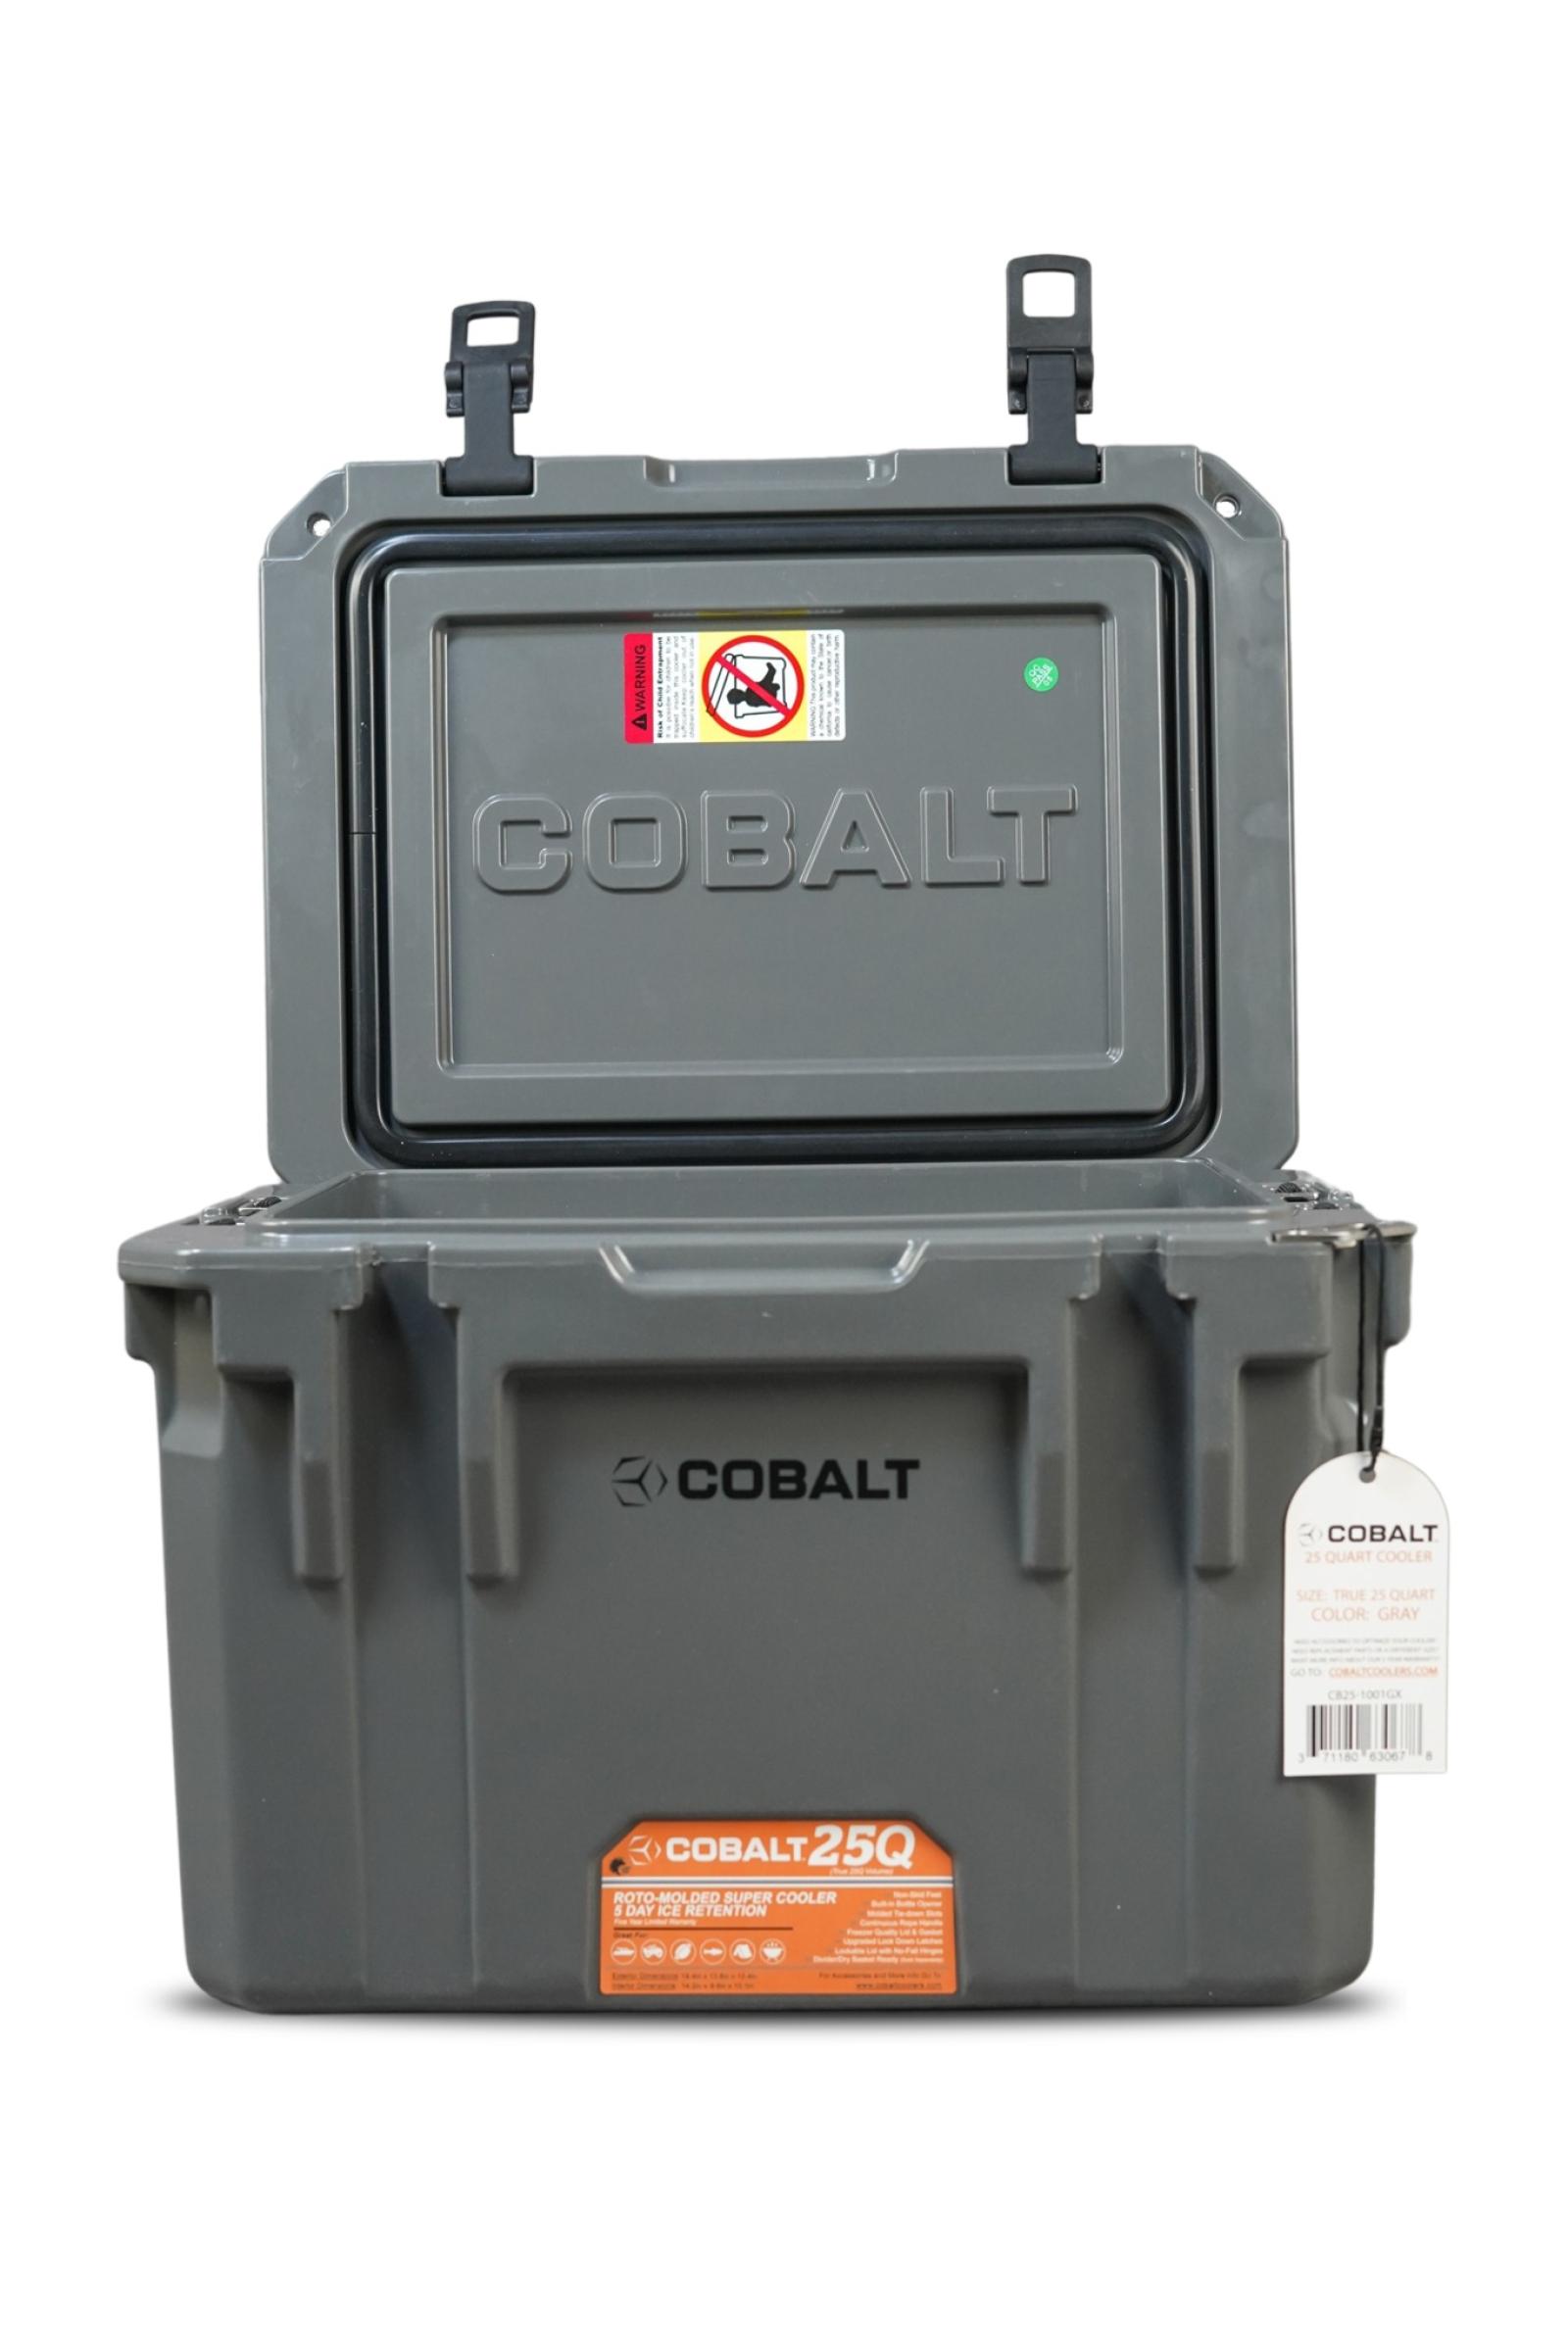 Cobalt 25 Qt. Rotomolded Cooler